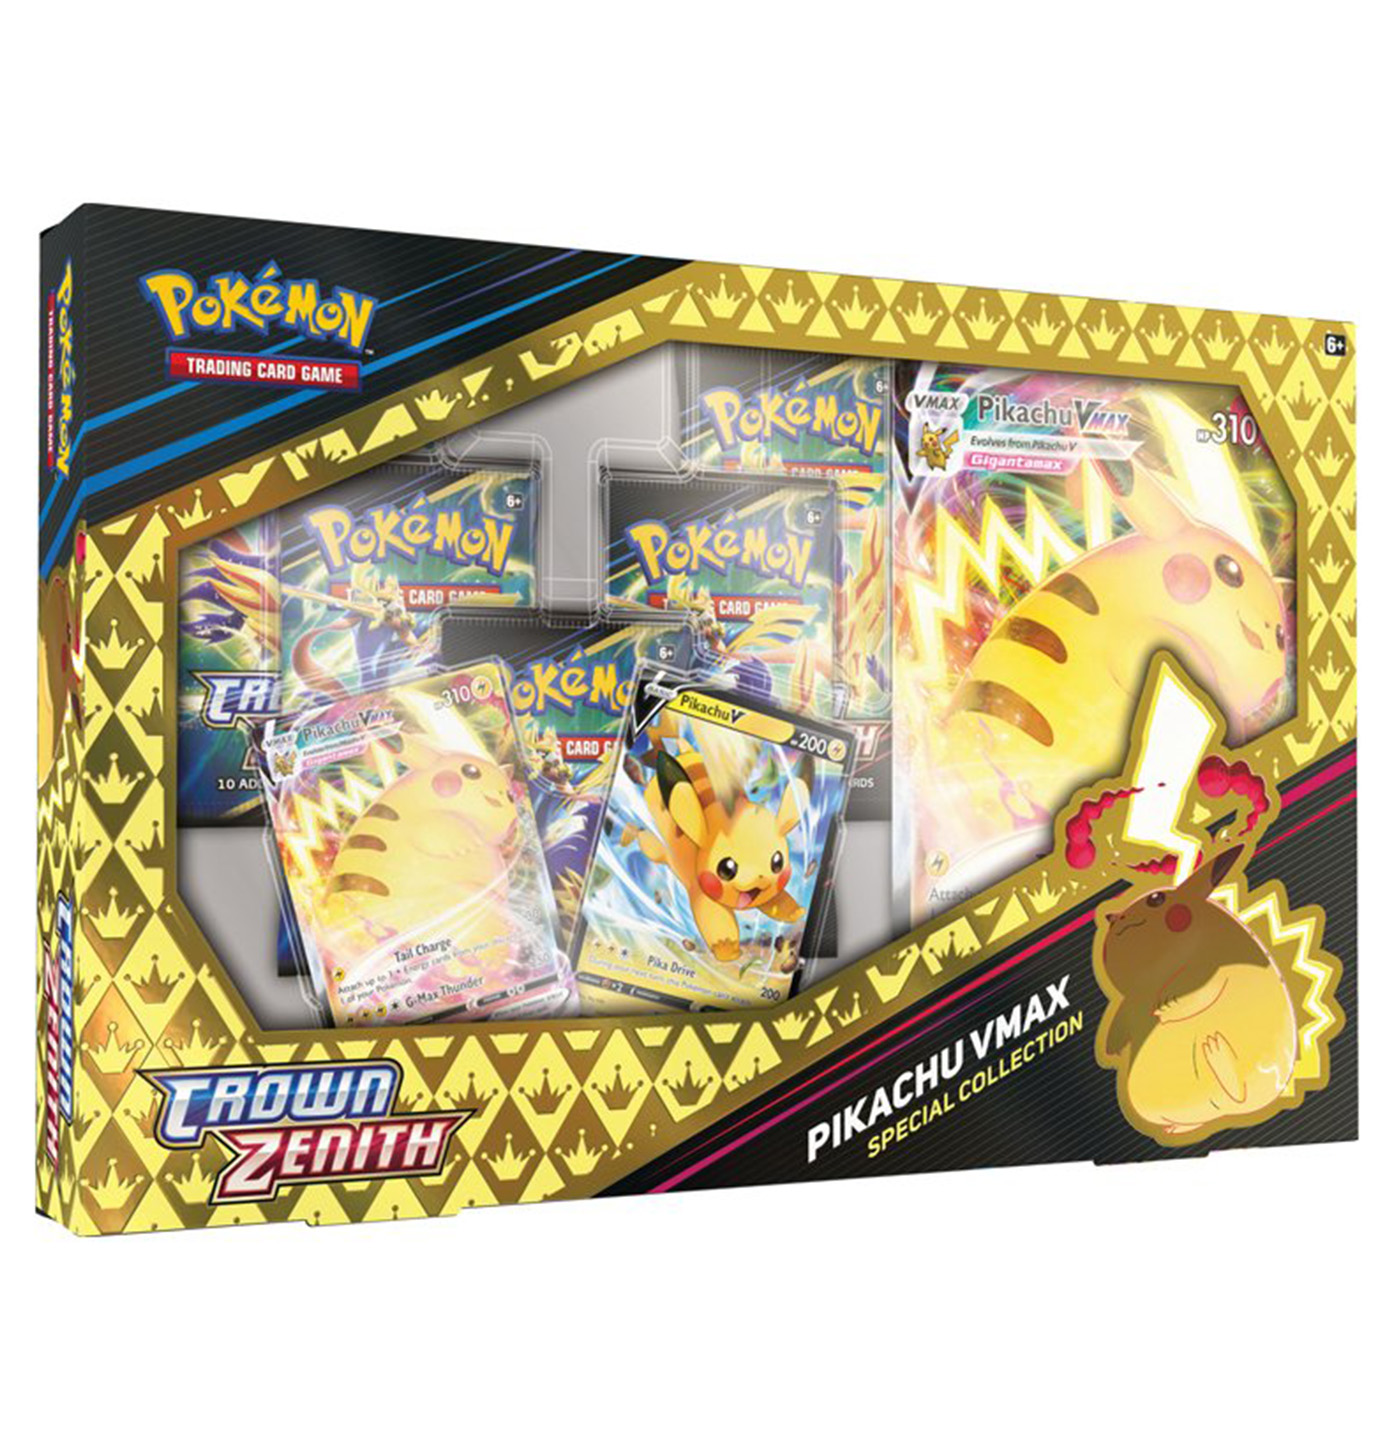 Pokémon Crown Zenith Pikachu VMAX Special Collection Box - EN